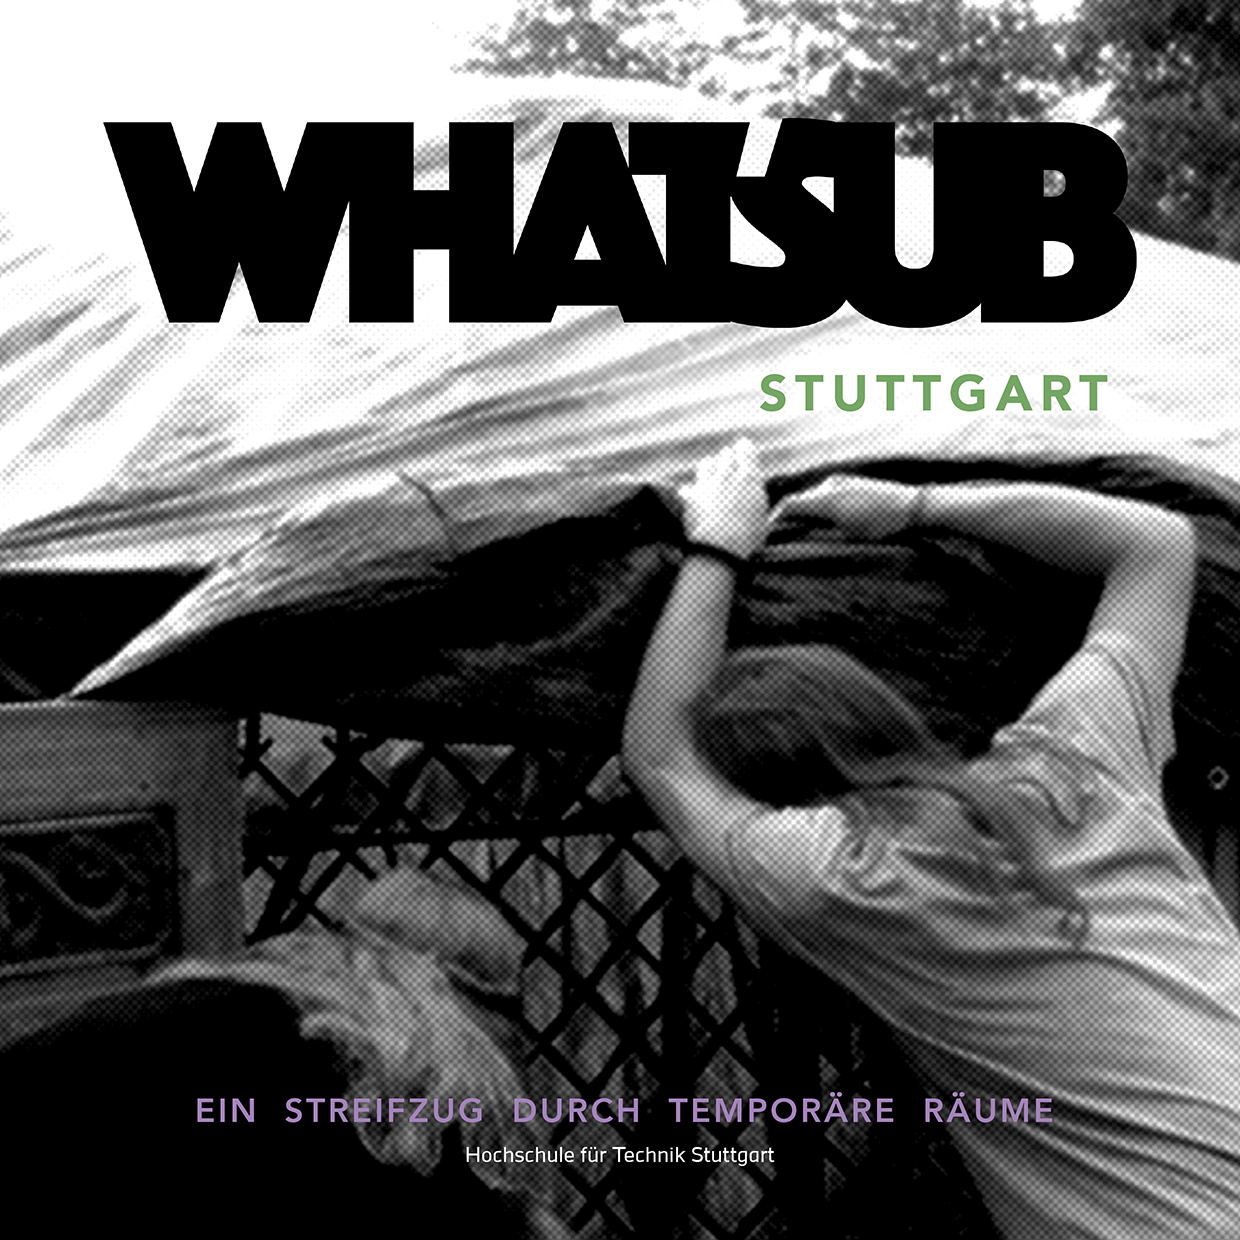 What’SUB Stuttgart